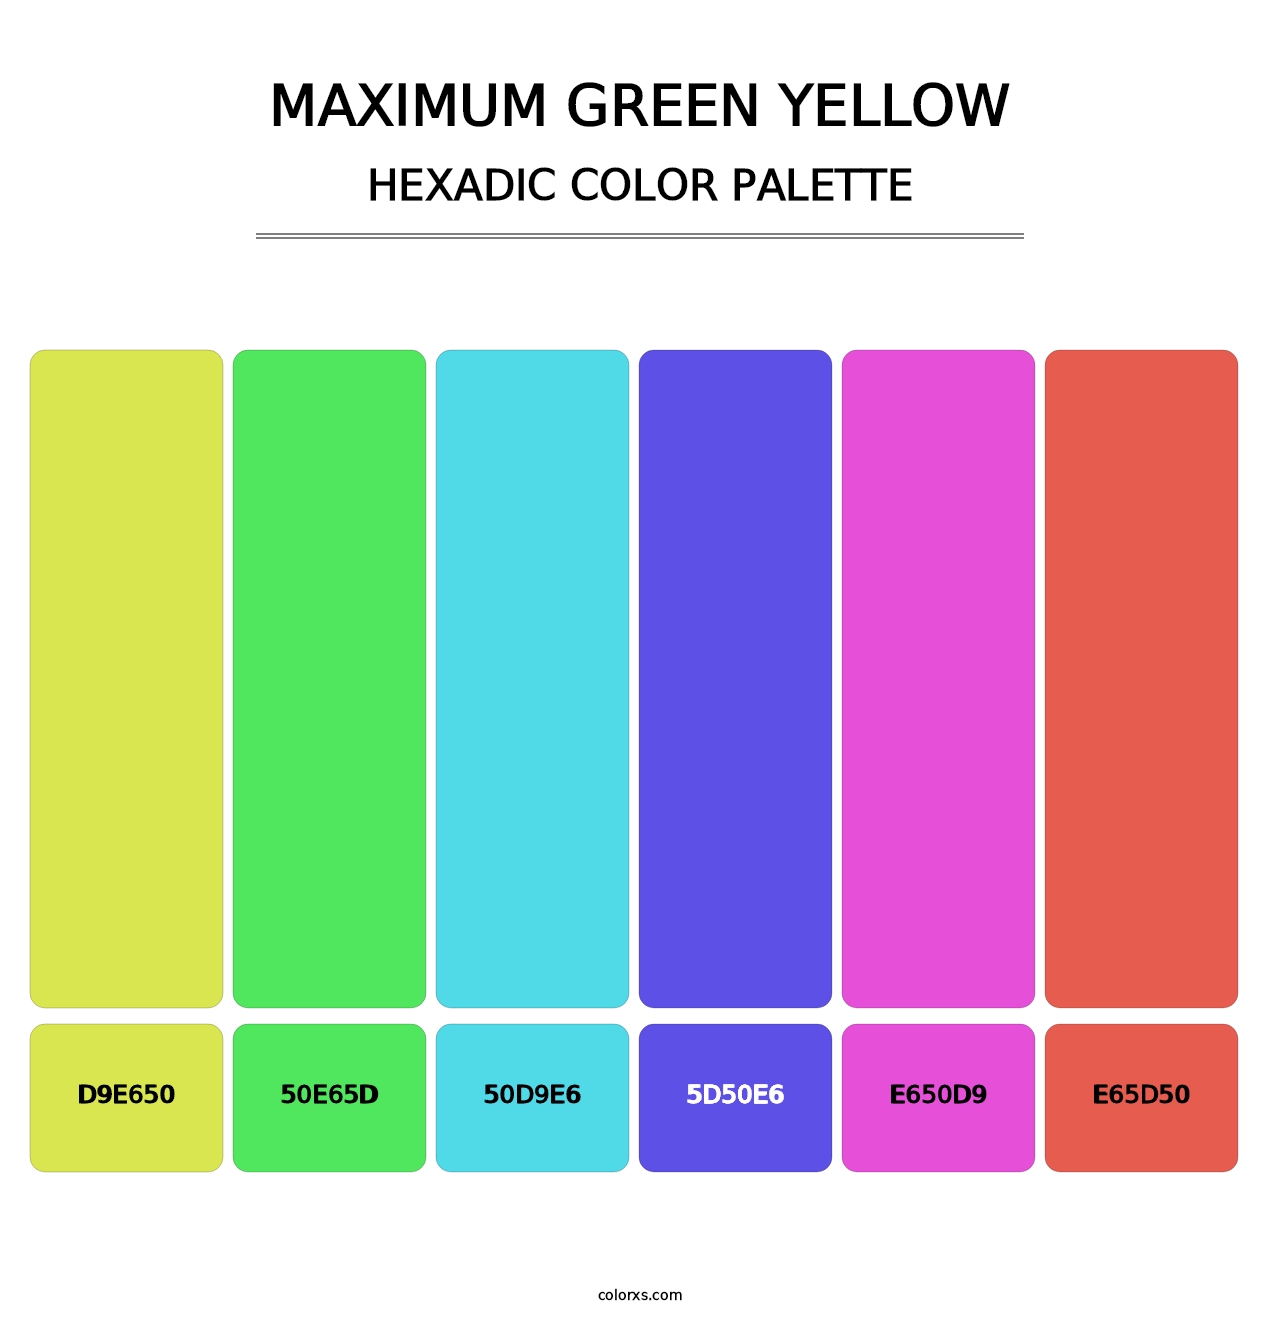 Maximum Green Yellow - Hexadic Color Palette